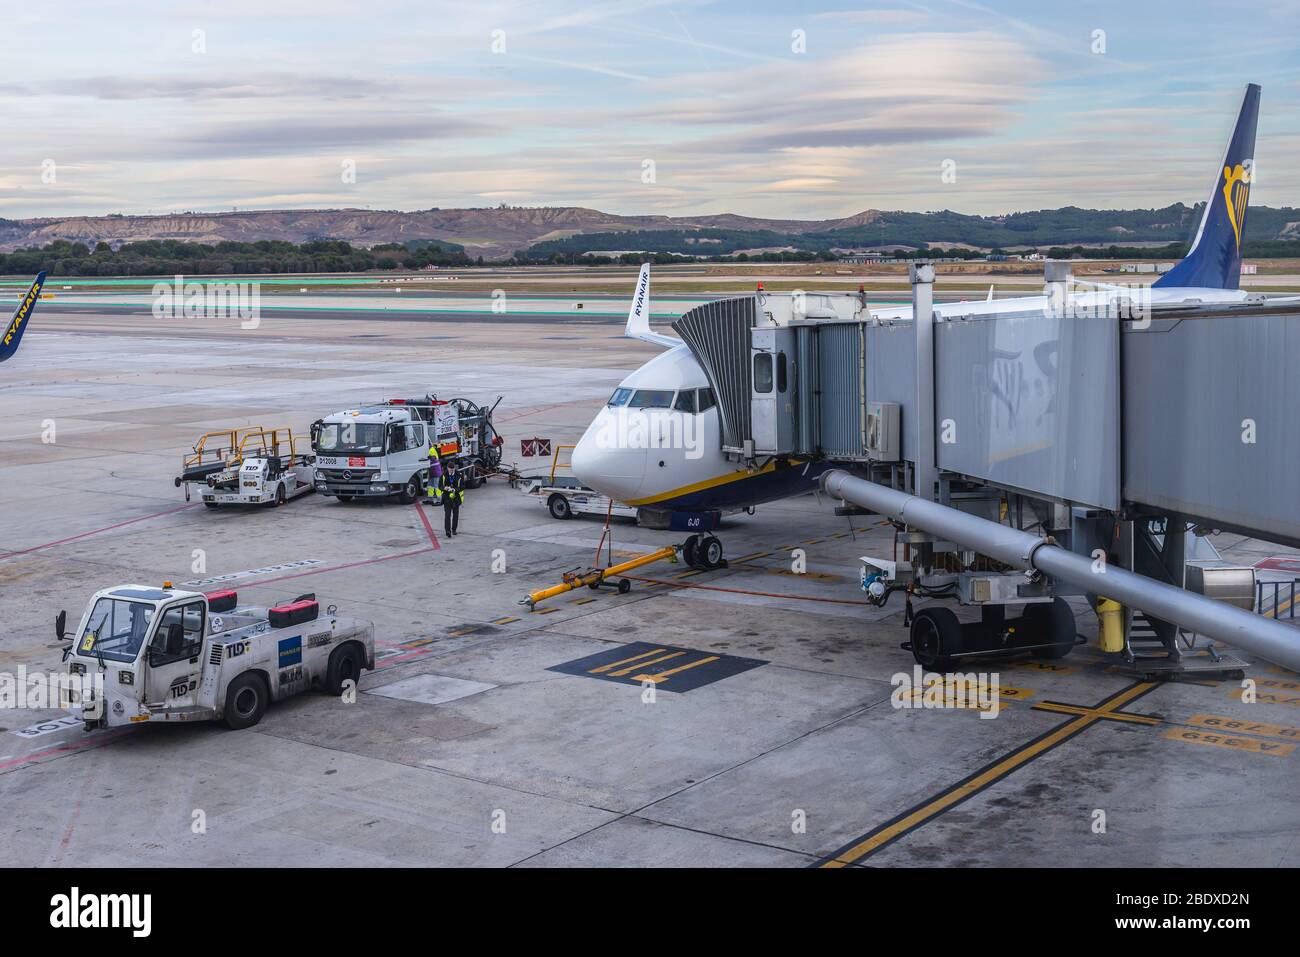 Ryanair aereo Adolfo Suarez Madrid-Barajas Aeroporto, principale aeroporto internazionale che serve Madrid in Spagna Foto Stock